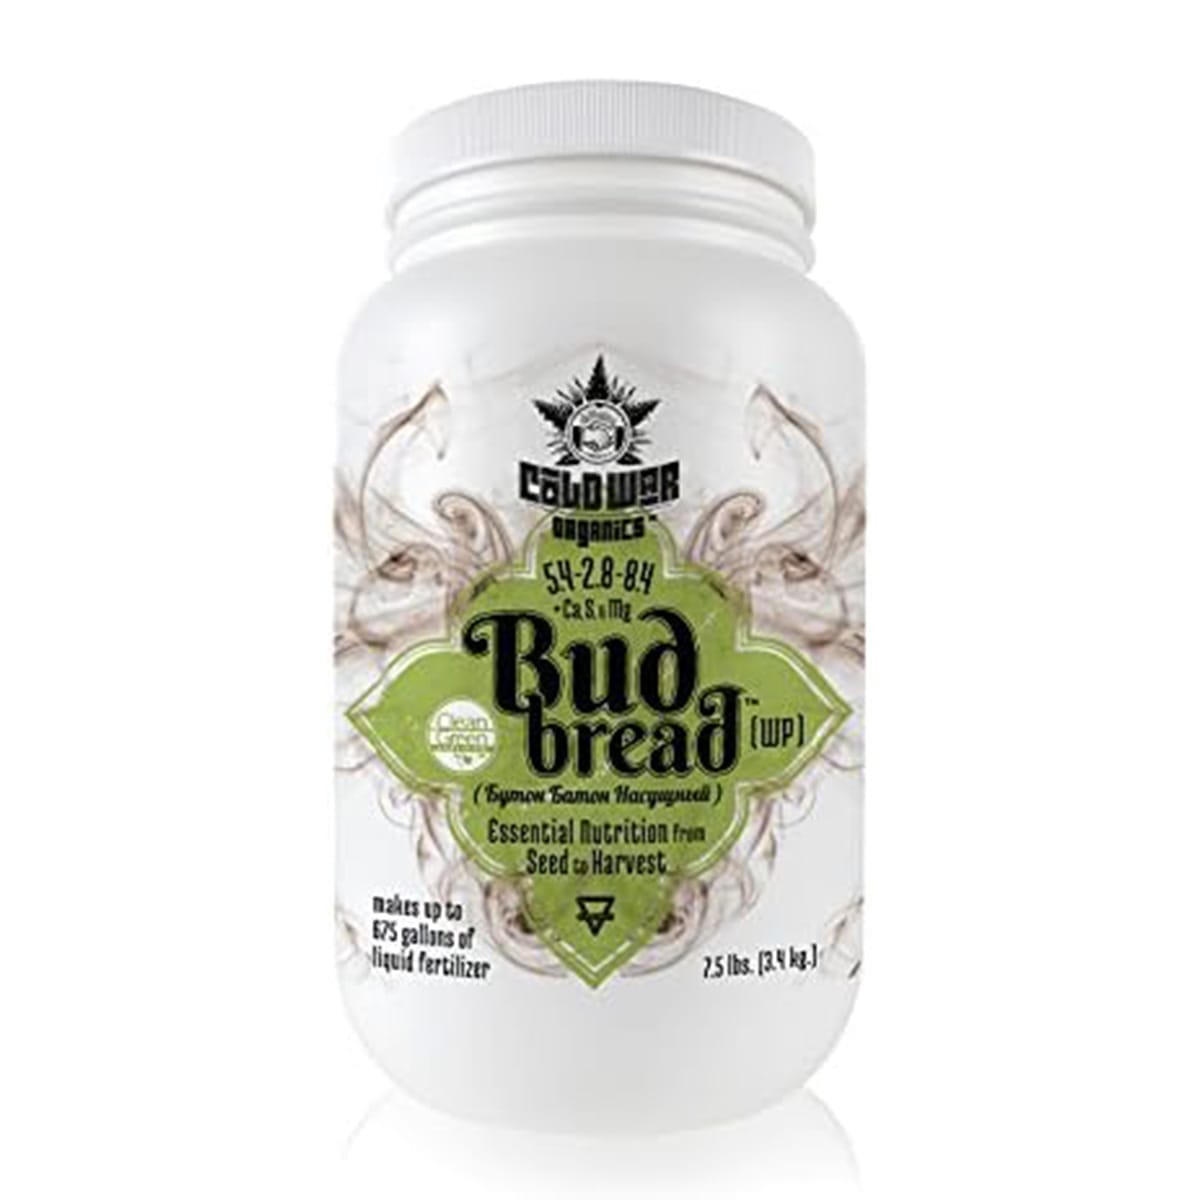 Cold War Organics Bud Bread 7.5 lb